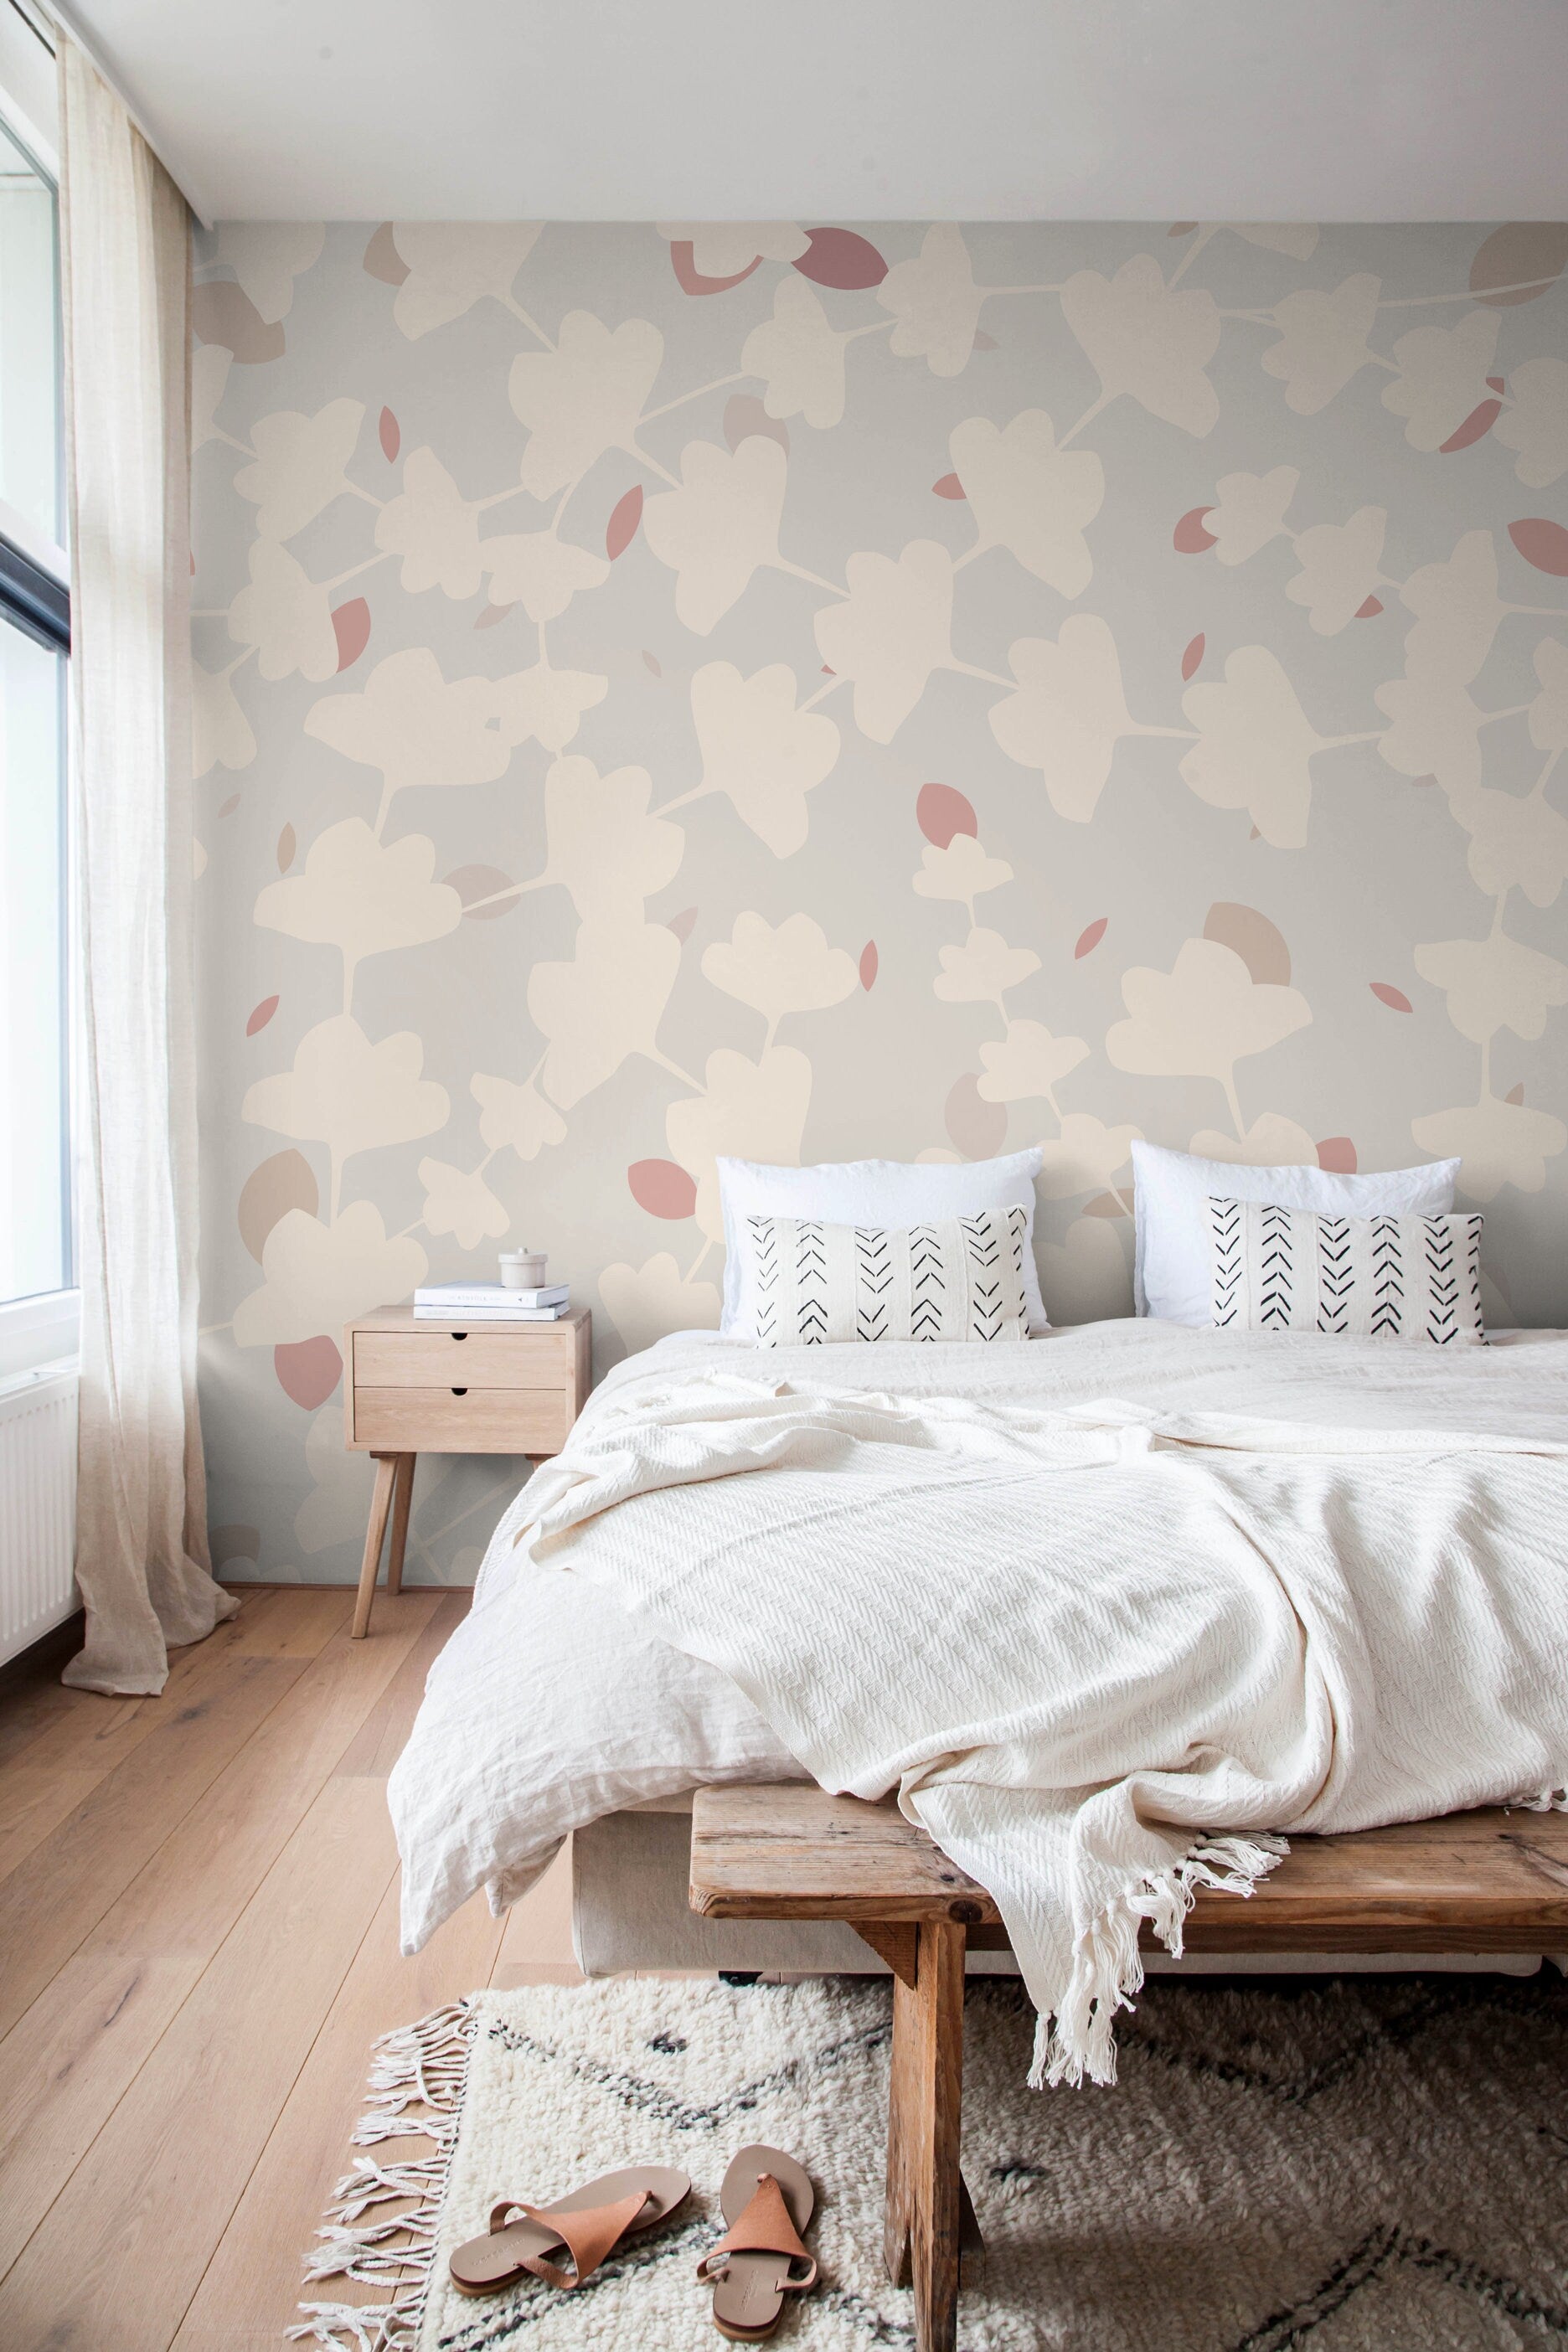 Removable Wallpaper, Temporary Wallpaper, Minimalistic Wallpaper, Peel and Stick Wallpaper, Leaf Wallpaper - X064